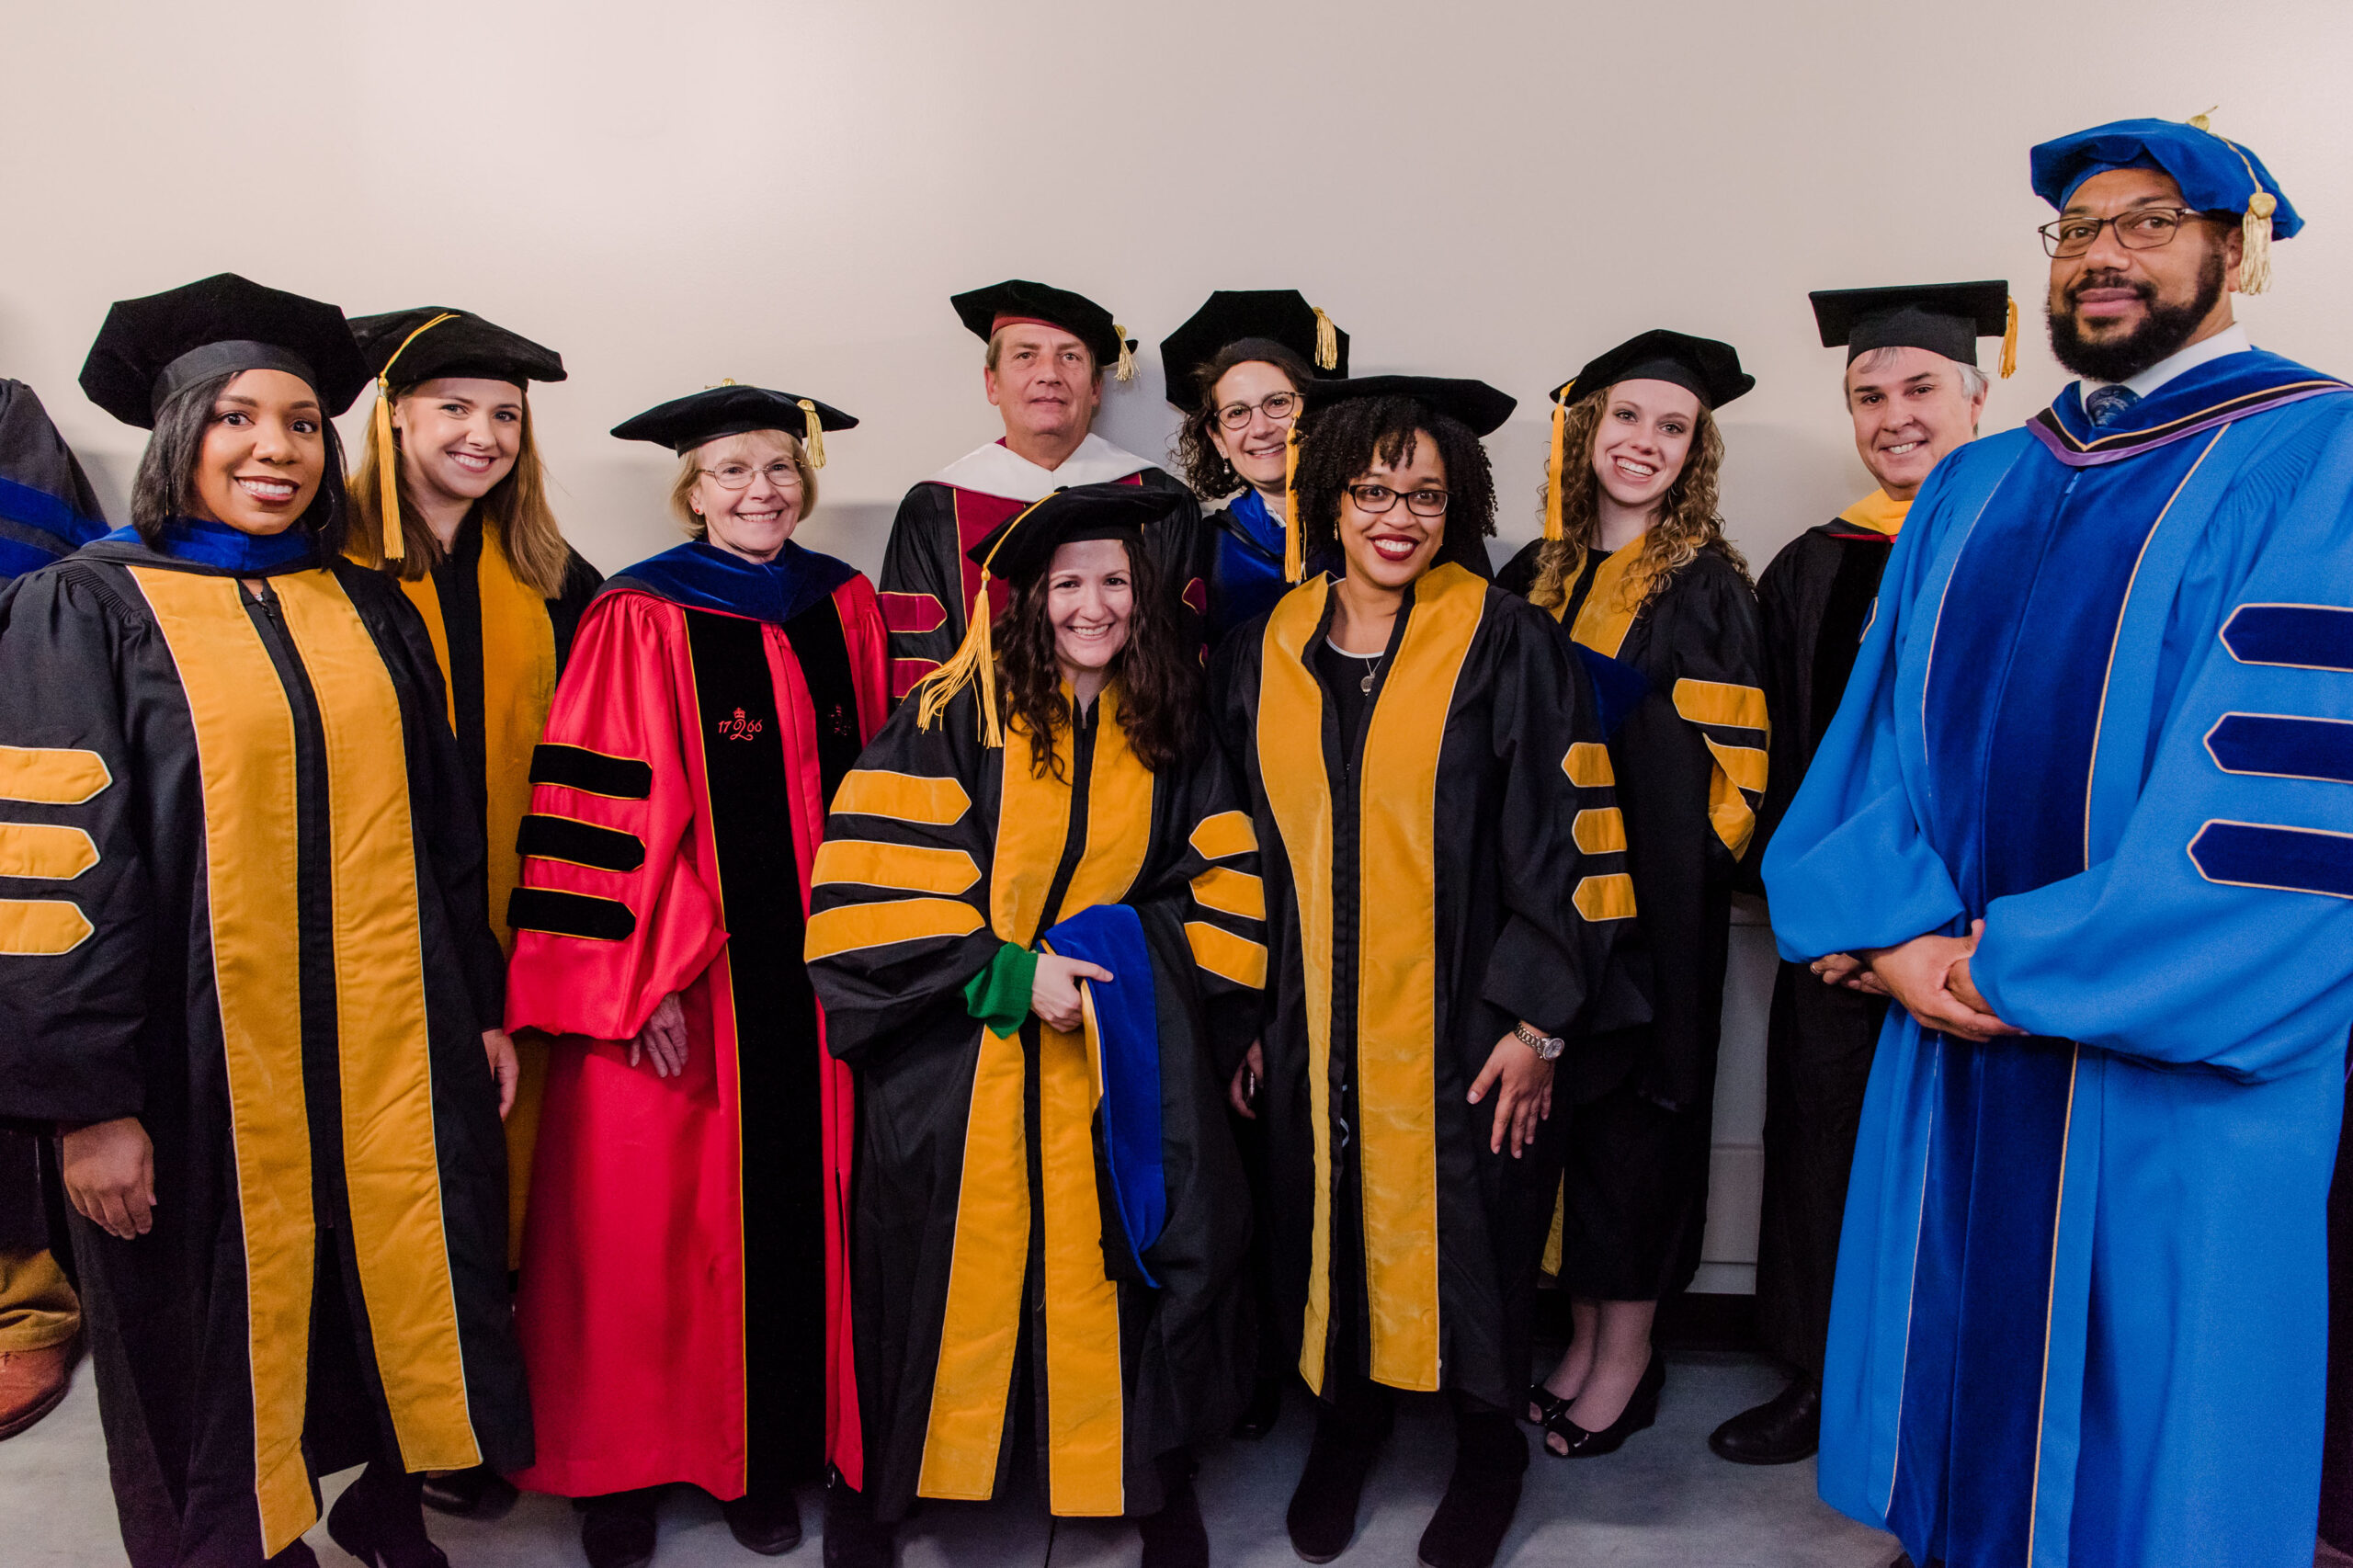 professors in graduation garb pose together